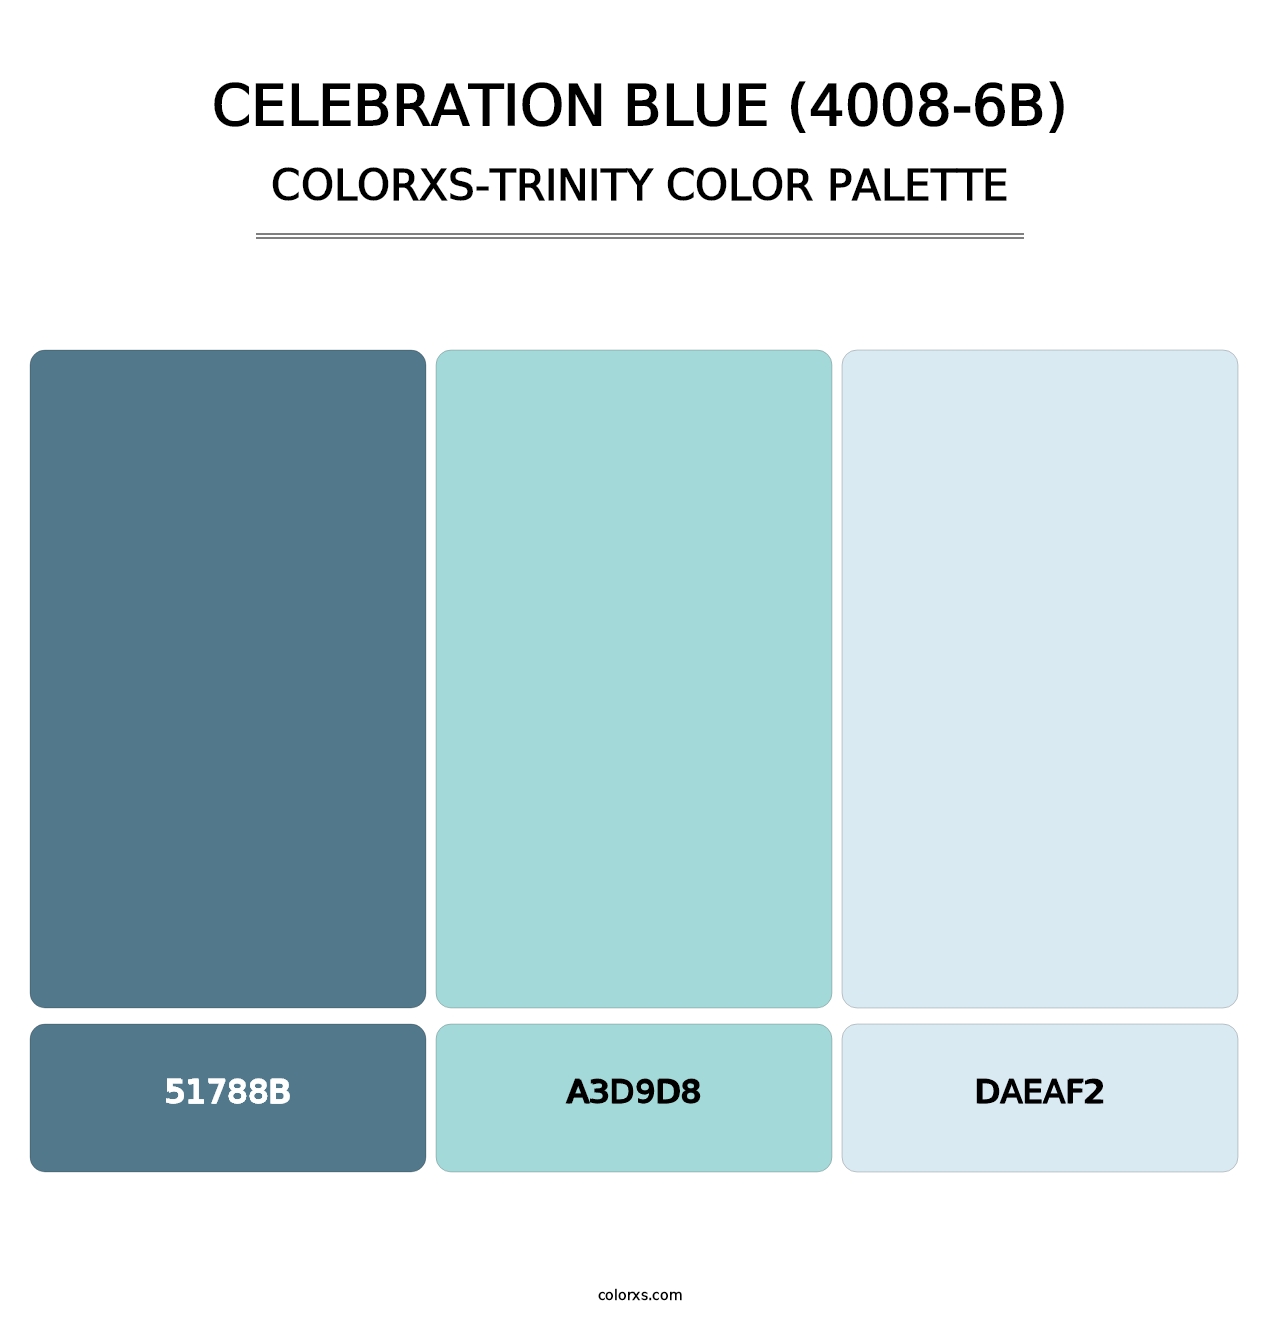 Celebration Blue (4008-6B) - Colorxs Trinity Palette